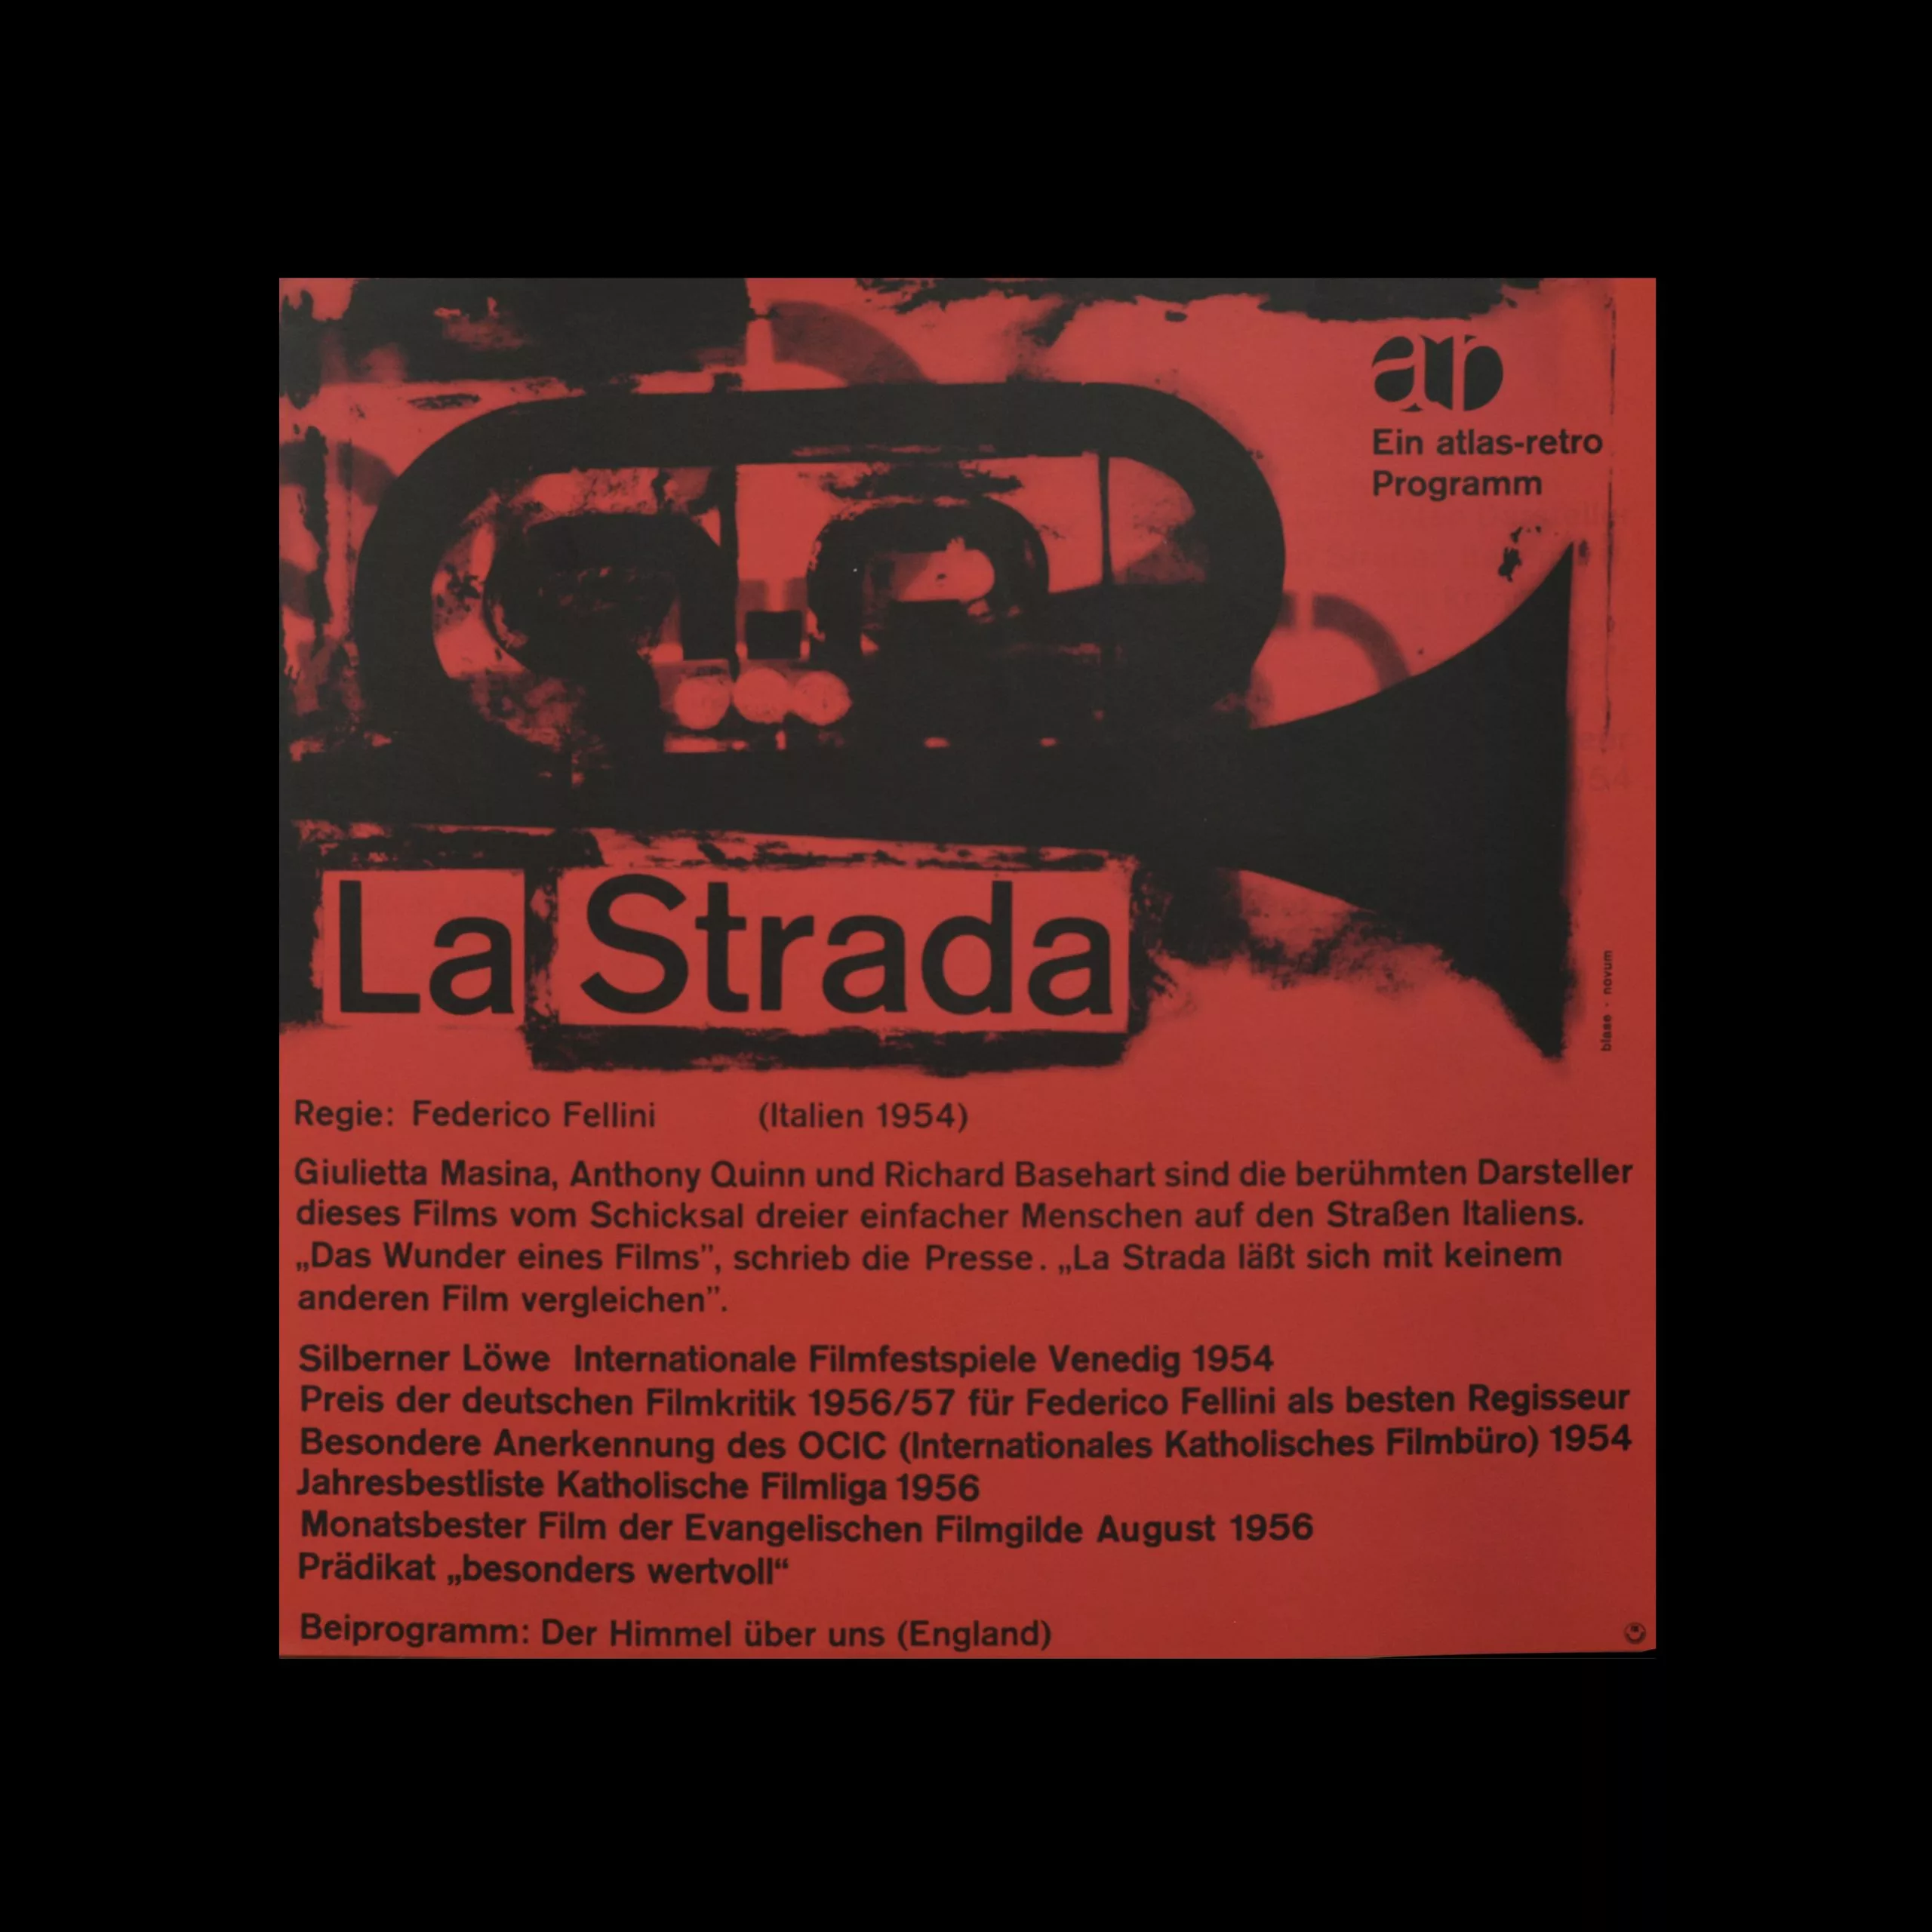 La Strada, Atlas Films Poster, 1960s. Designed by Karl Oskar Blase